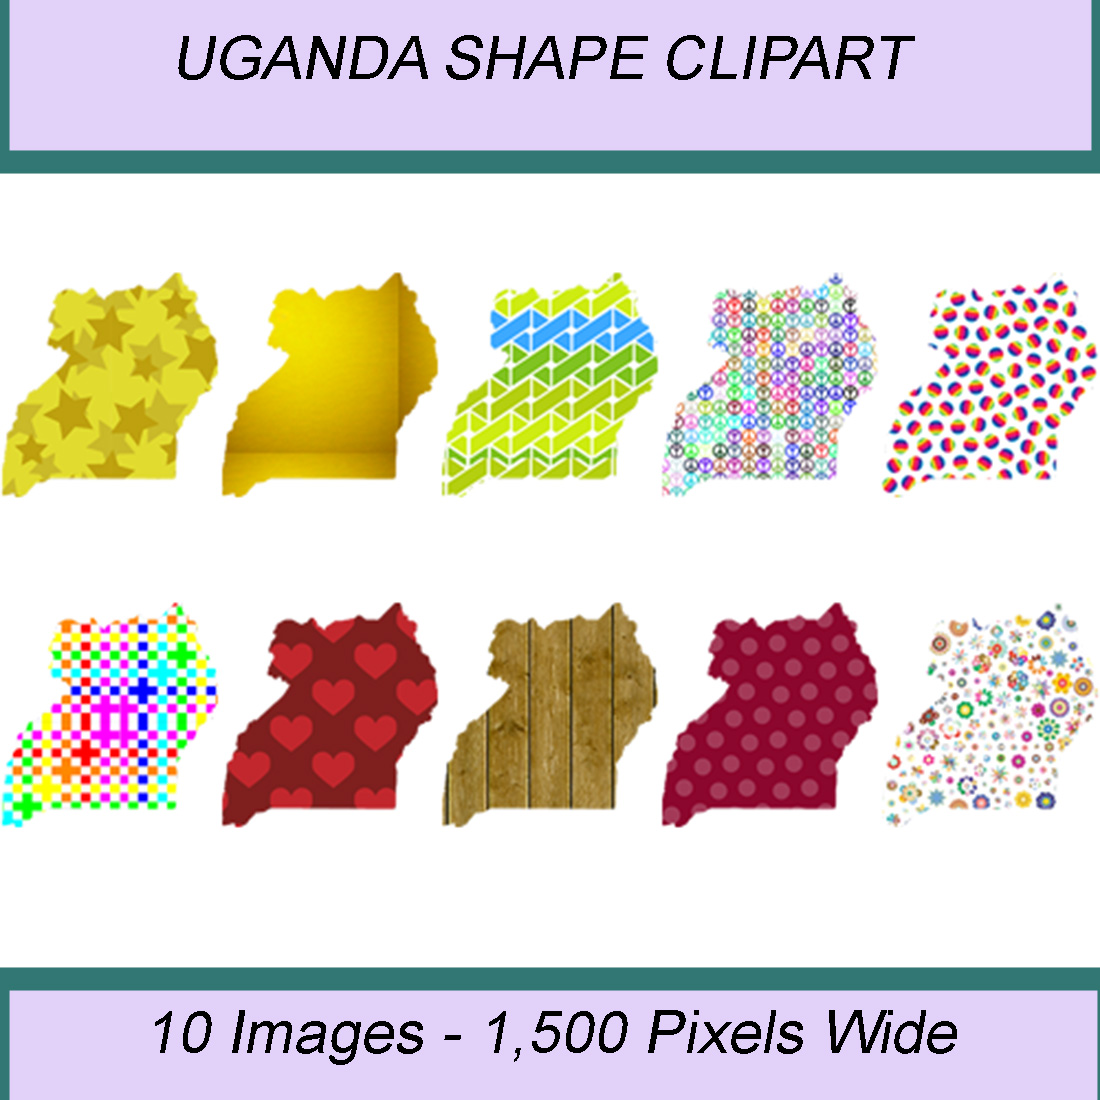 UGANDA SHAPE CLIPART ICONS cover image.